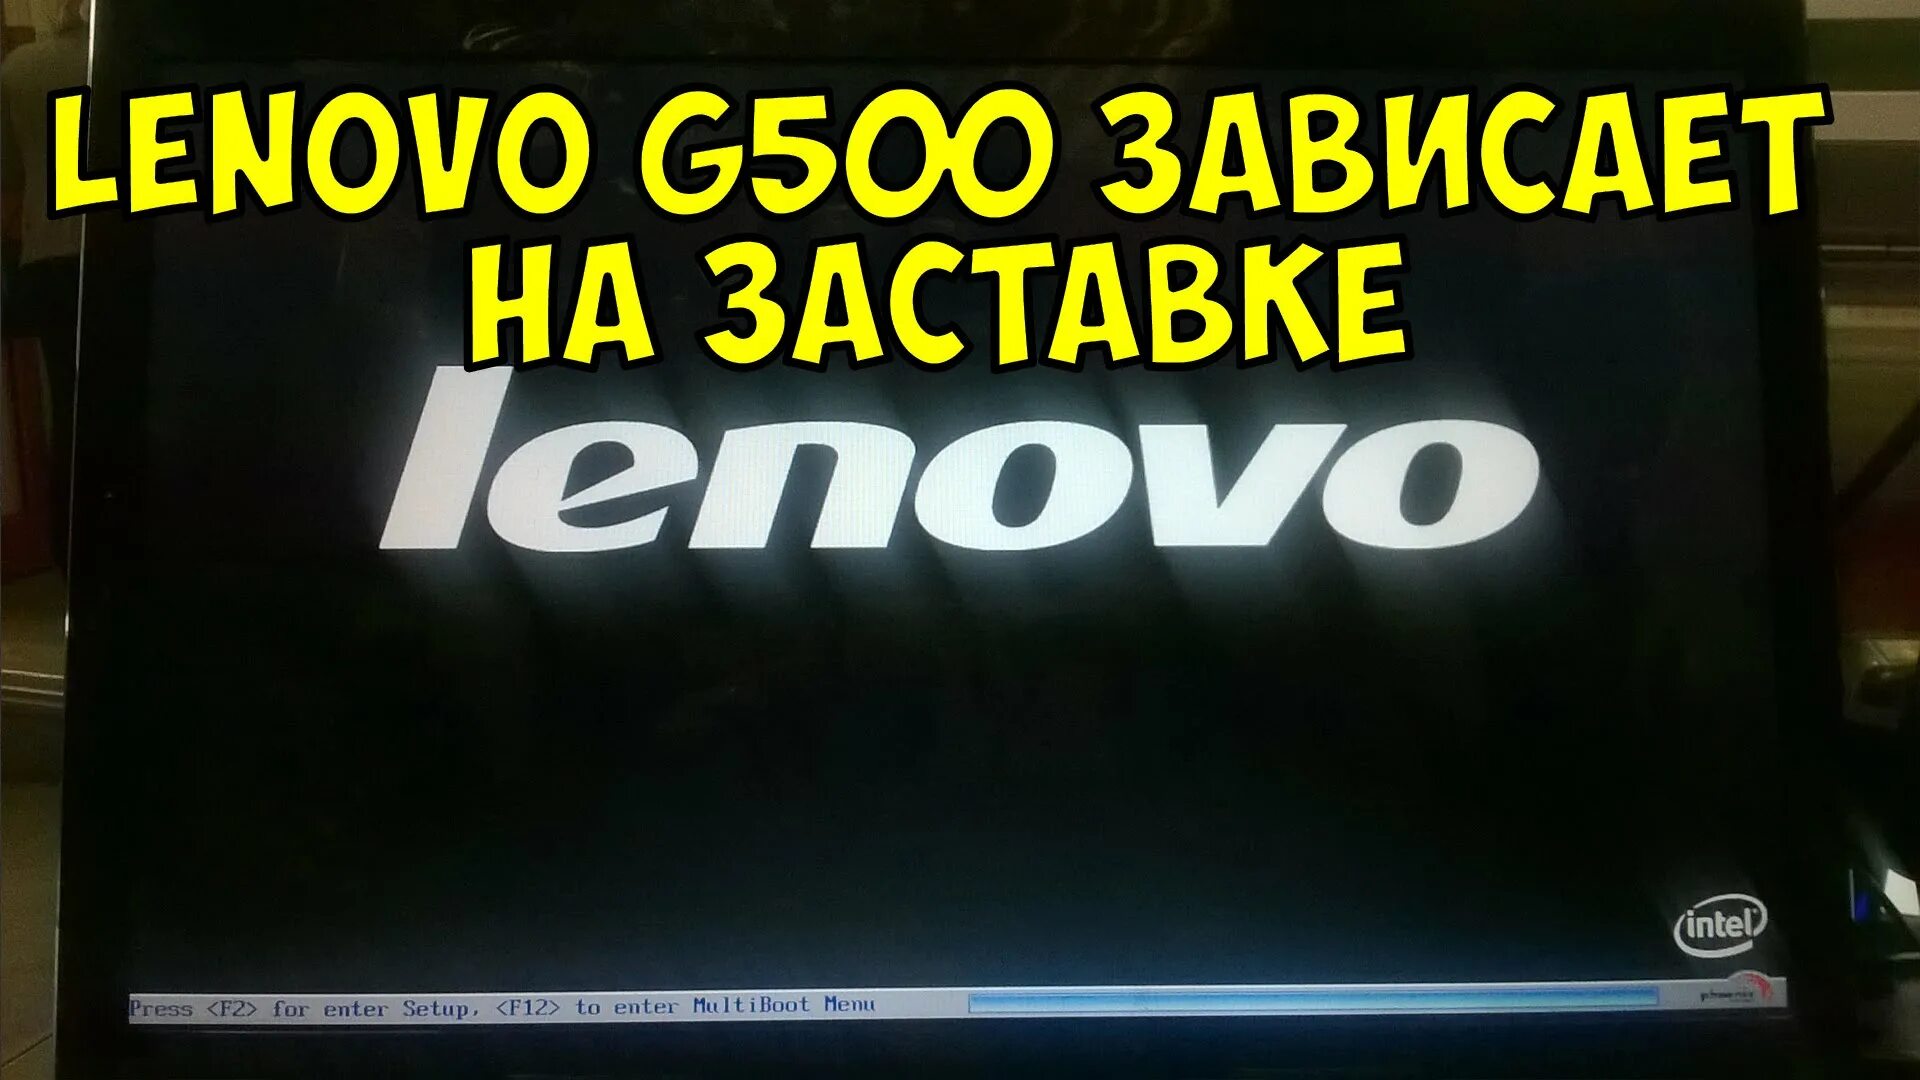 Lenovo зависает на заставке. Заставка леново при включении. Ноутбук завис на заставке. Логотип леново при включении ноутбука. Завис ноутбук леново